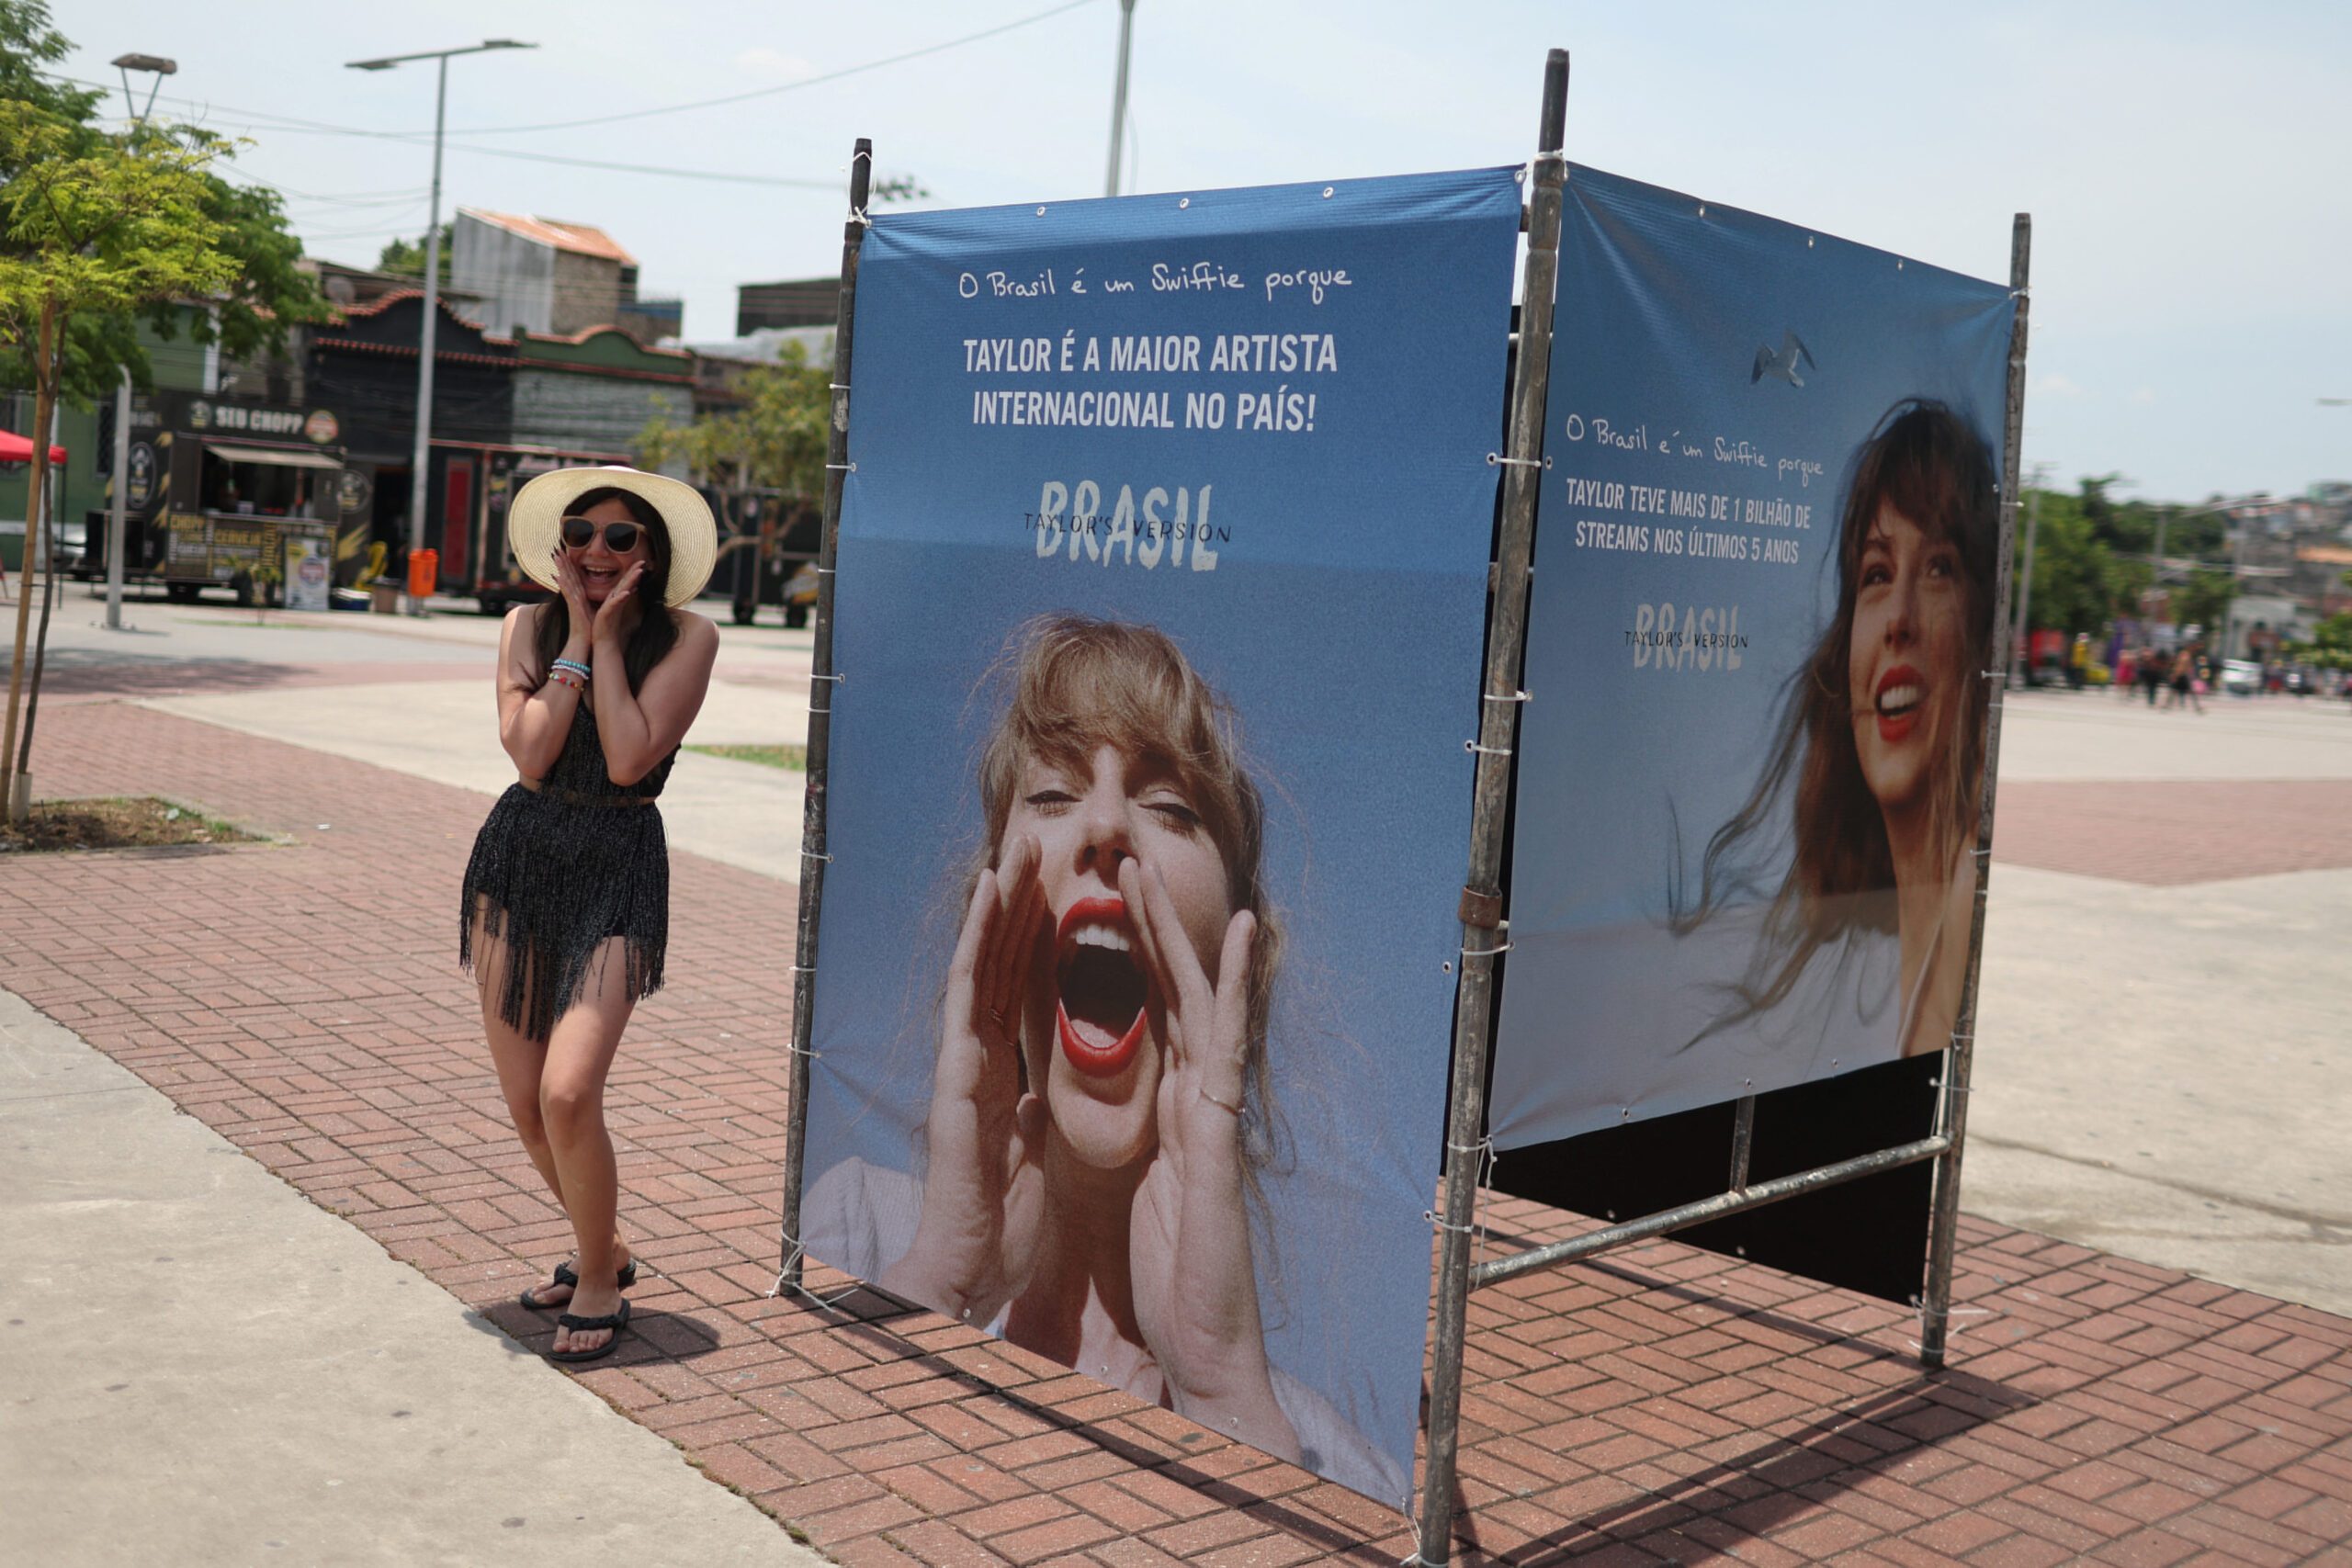 Rio de Janeiro police investigate Taylor Swift concert organizers after fan’s death